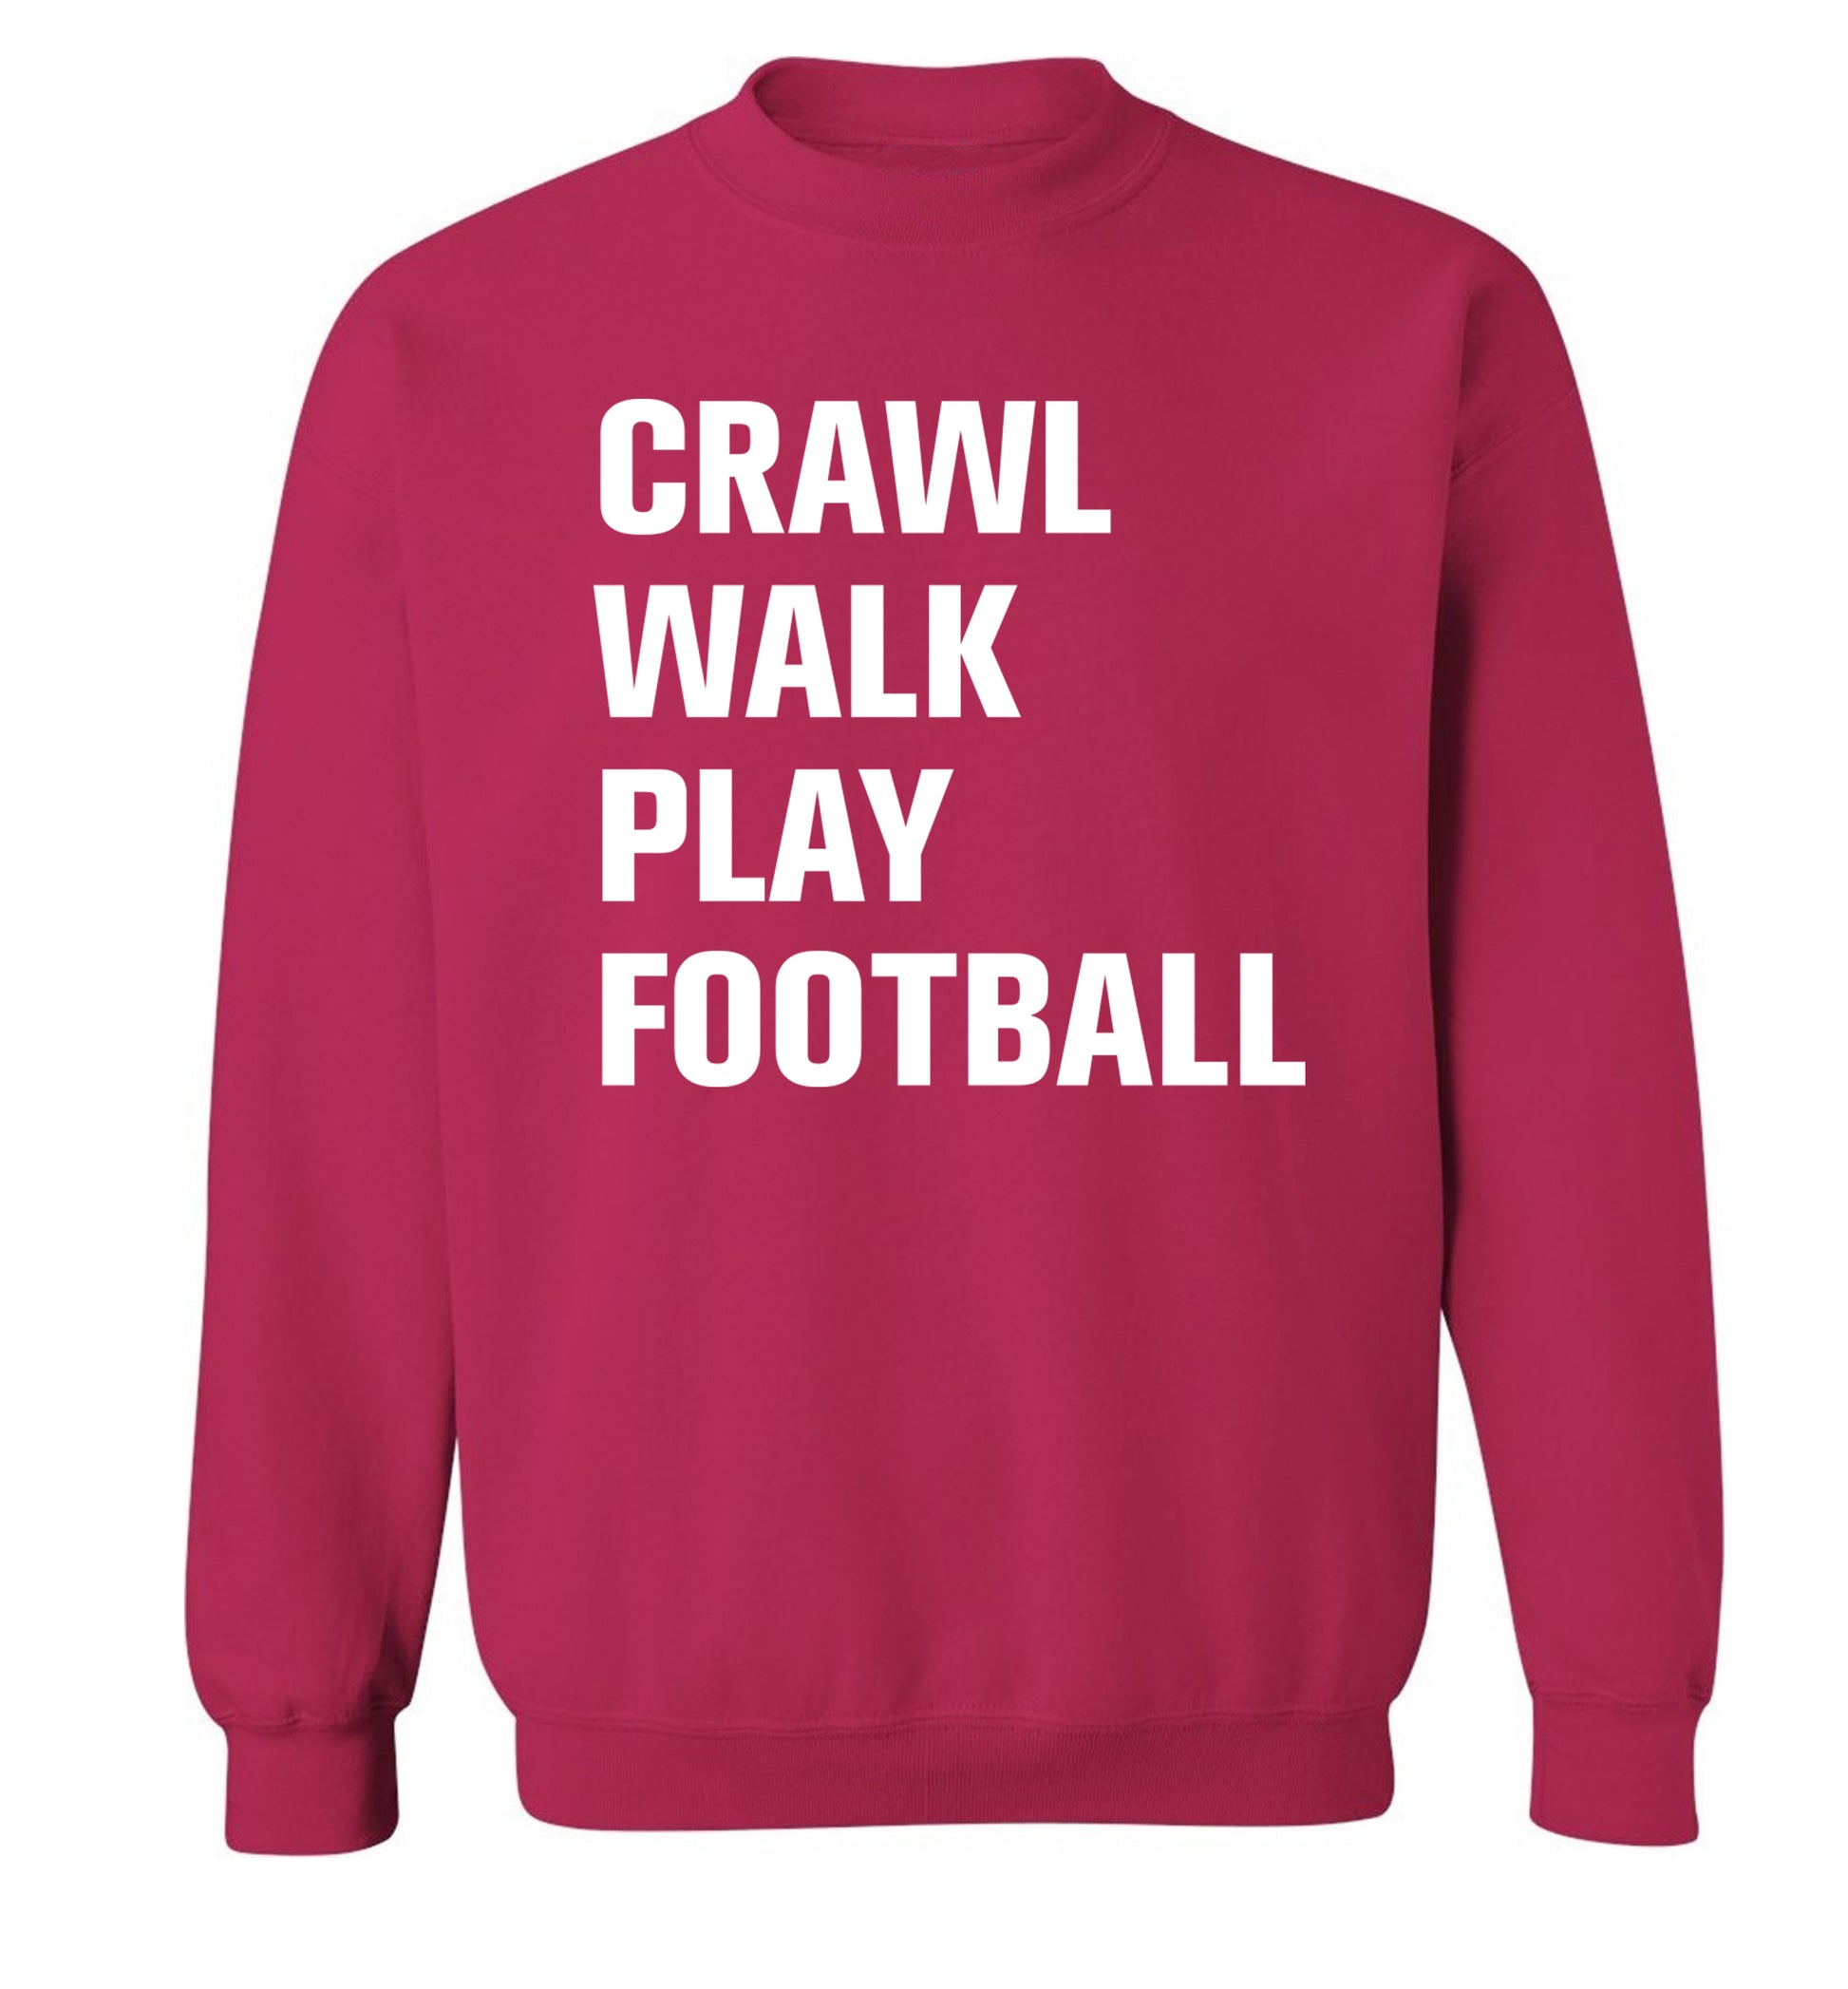 Crawl, walk, play football Adult's unisex pink Sweater 2XL